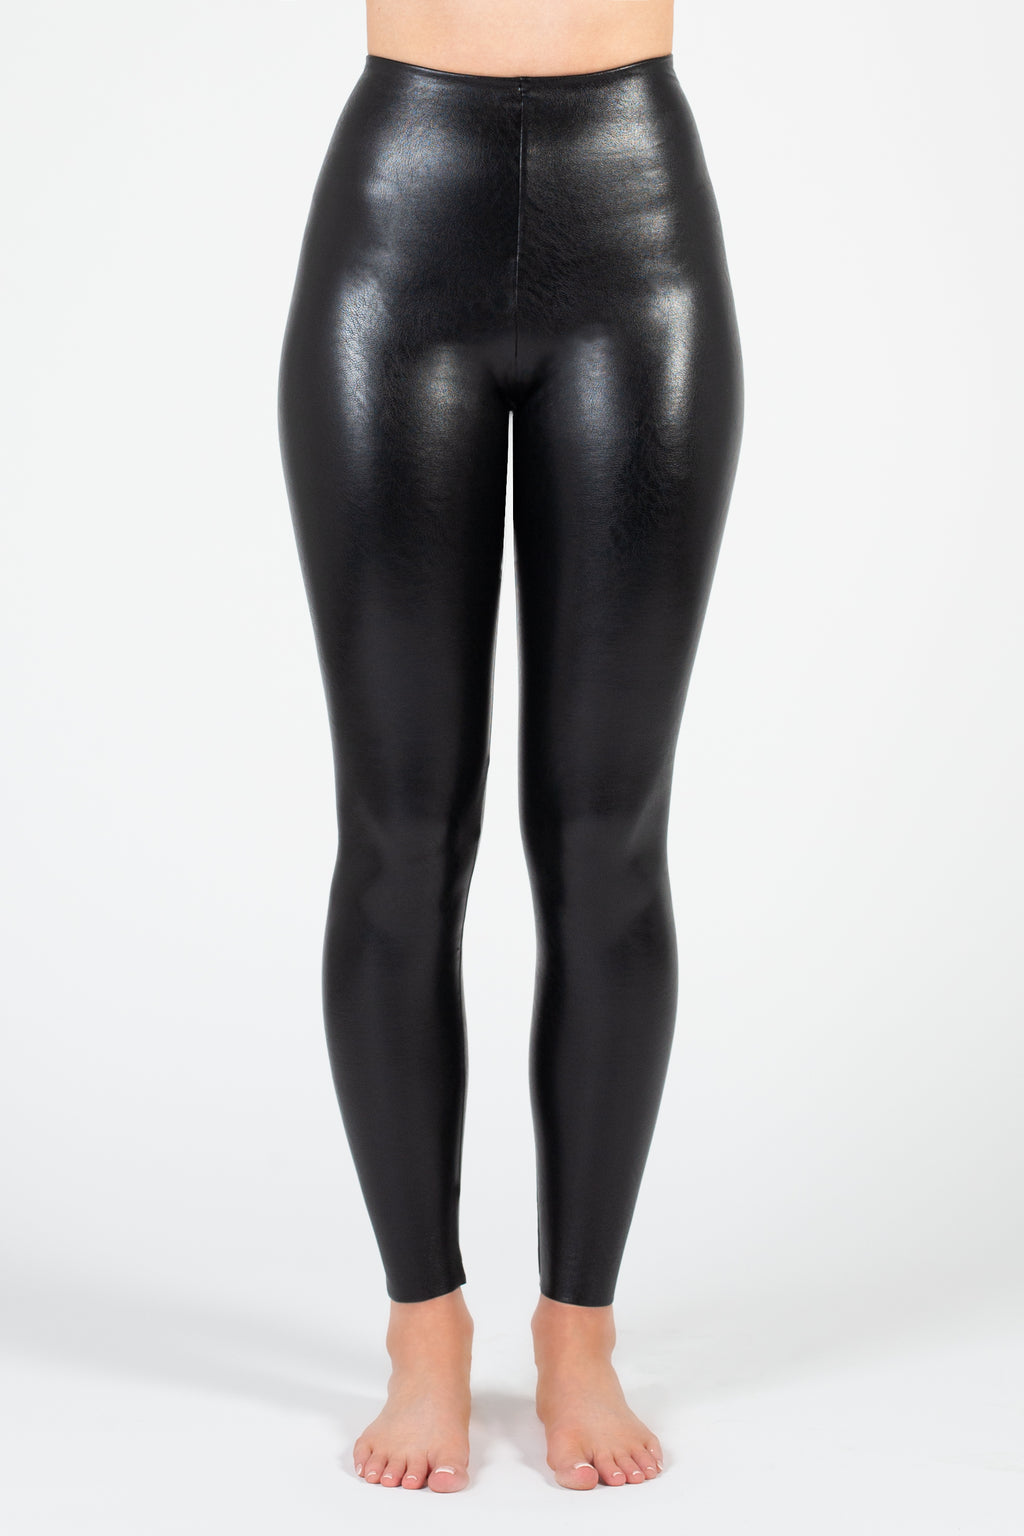 COMMANDO Faux Patent Leather Leggings Pants Control Top Burgundy Ruby Size  M for sale online